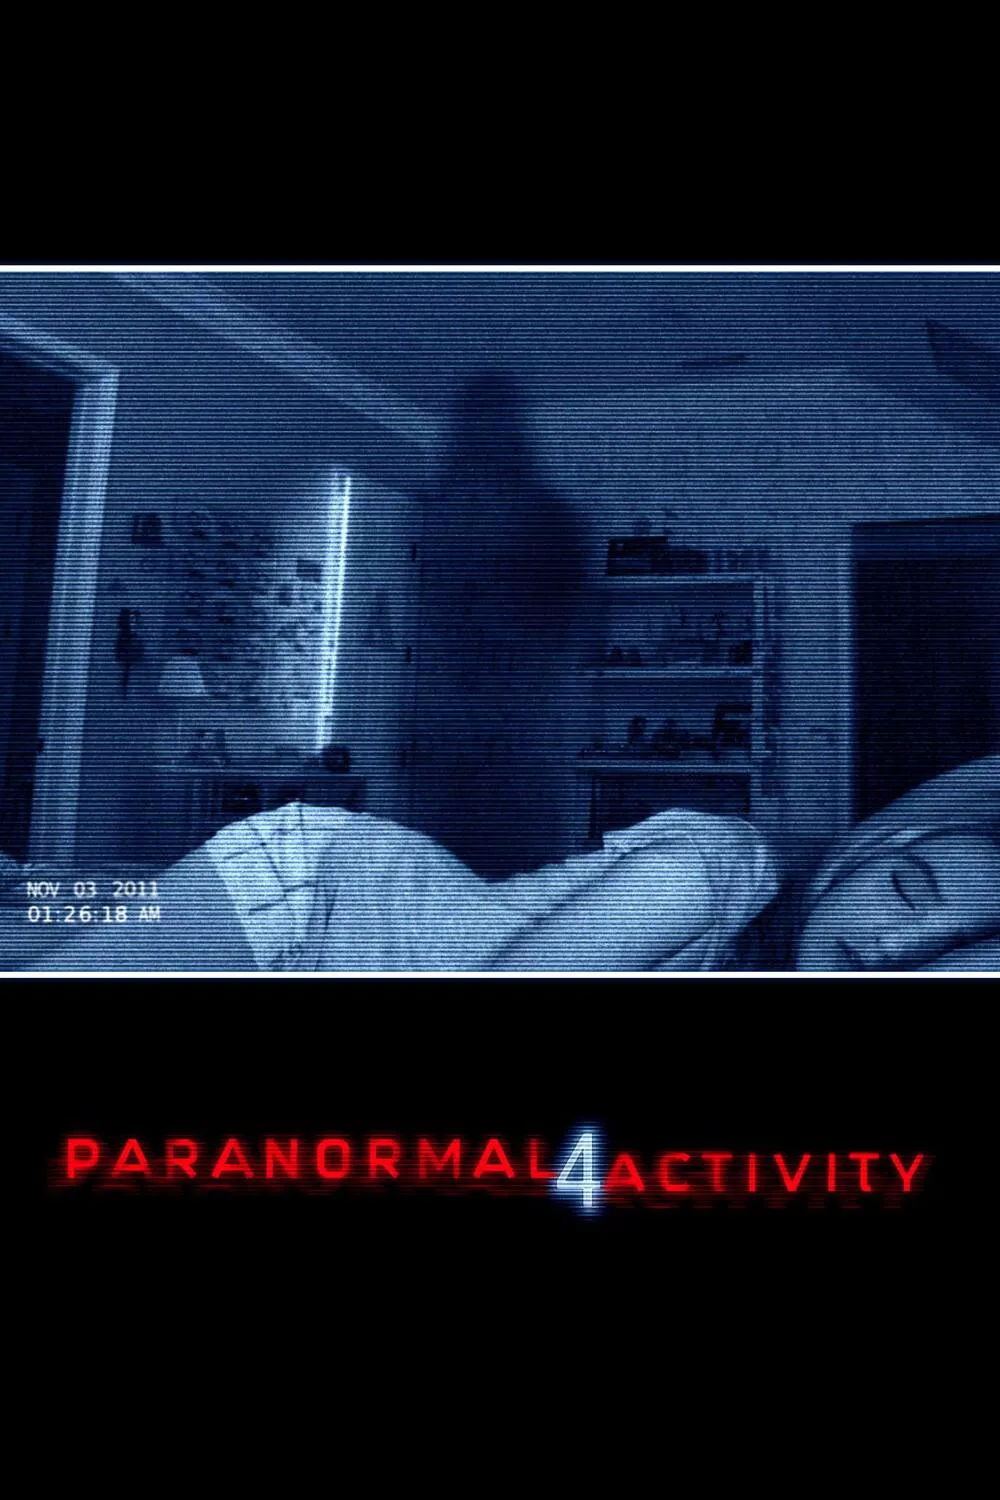 Paranormal Activity 4 International English Trailer 2